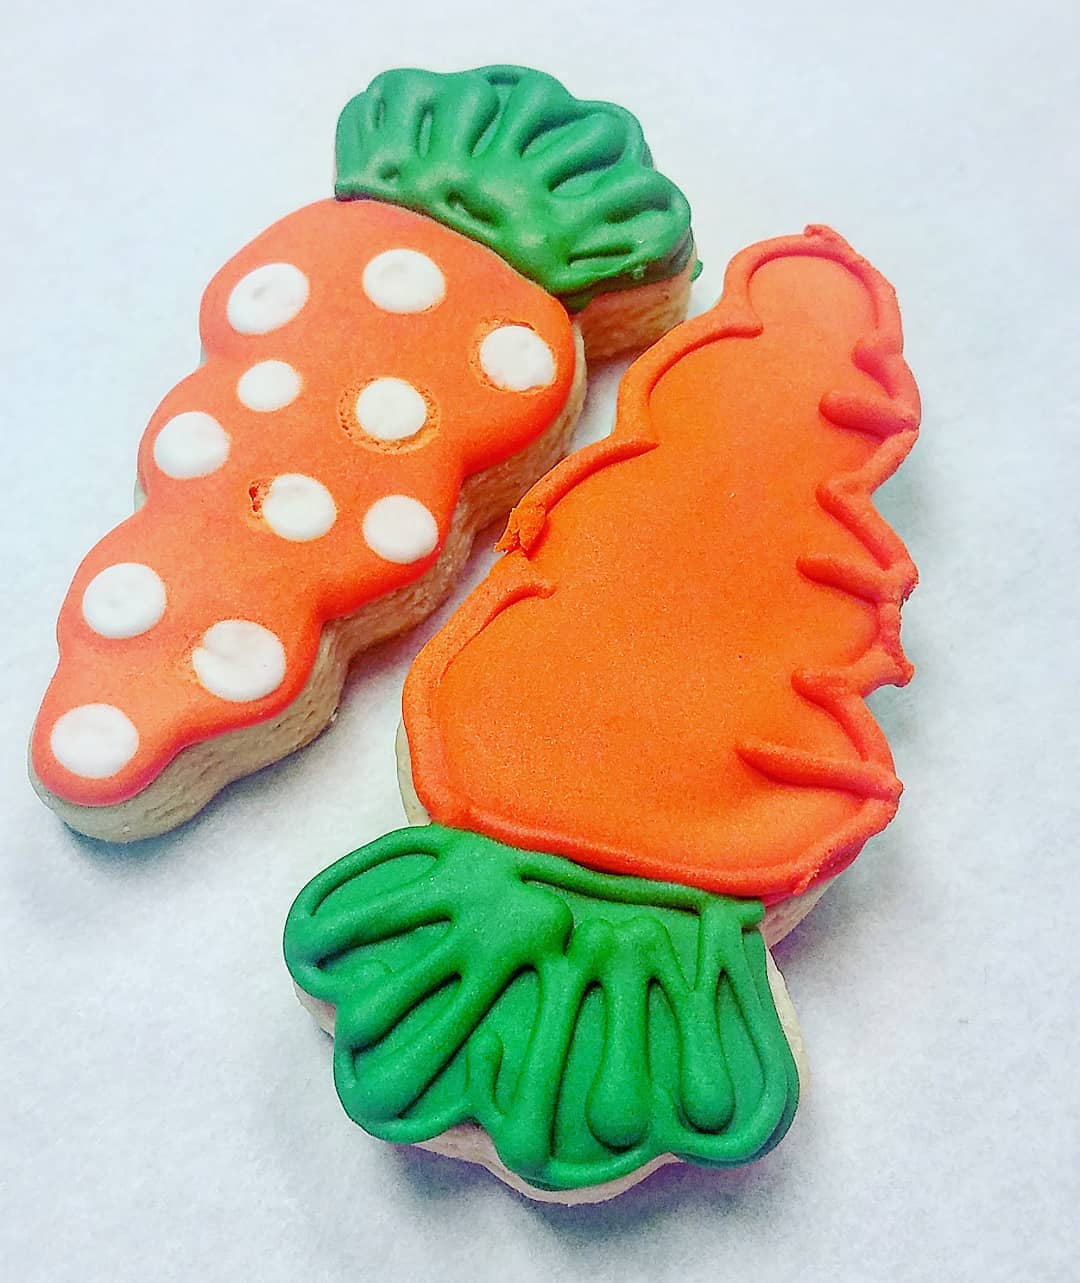 Cute Carrot Cookies. Handmade. Ready or Pre-order 405 430 5484
🥕
@bellekitchenokc @bellekitchendd #pastry #cookies #cookie #easter #carrot #handmade #eeeeeats #f52grams #instafood #instagood #yum #yummy #yes #foodporn #foodie #food #foodpics #beautiful #bellekitchen #nom #cookingchannel